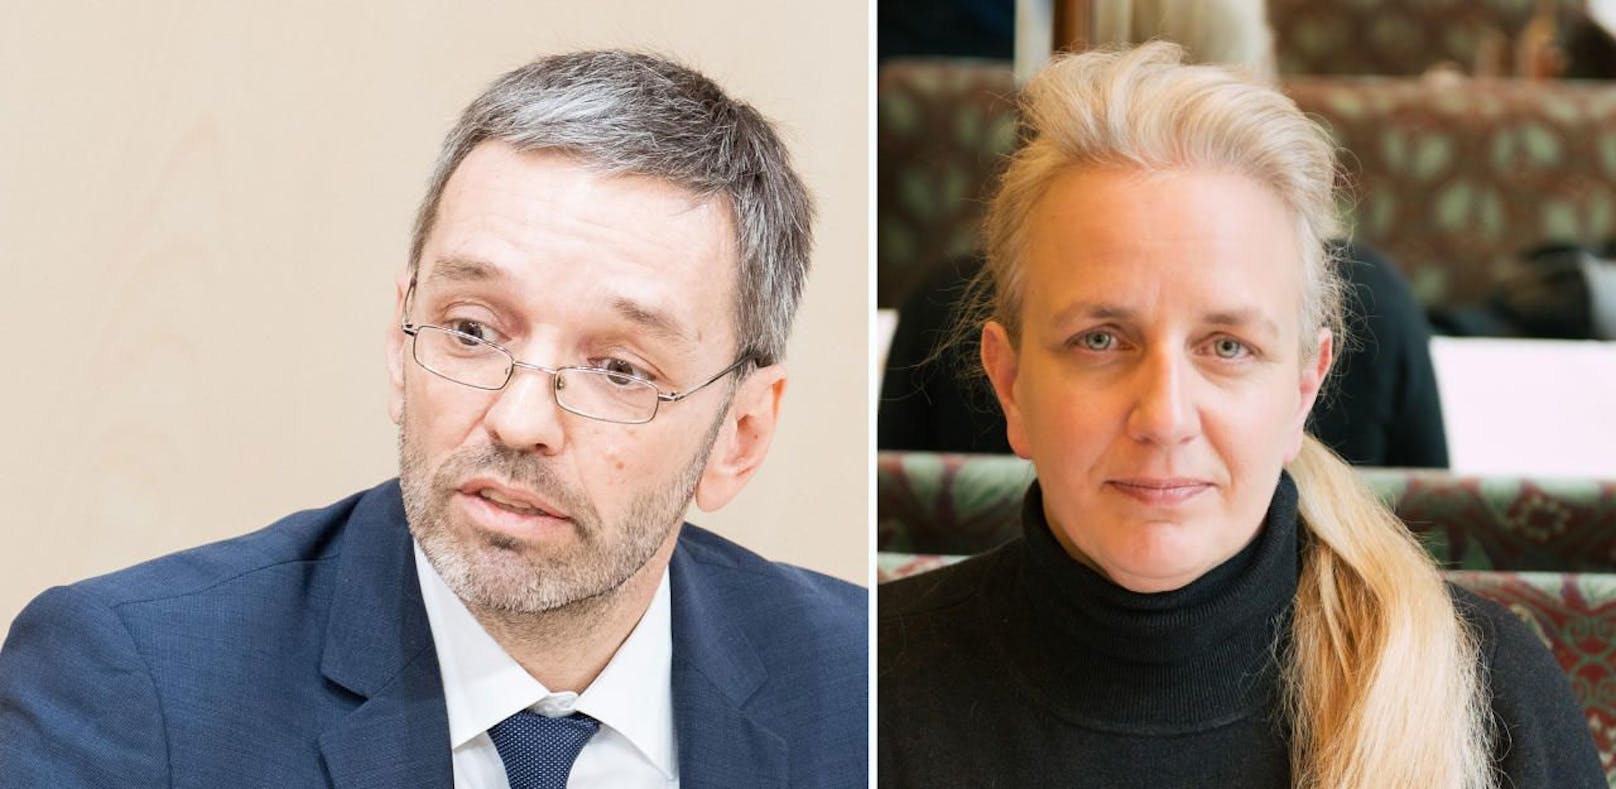 Daniela Kickl kritisiert Cousin Herbert, die FPÖ und die ÖVP.
